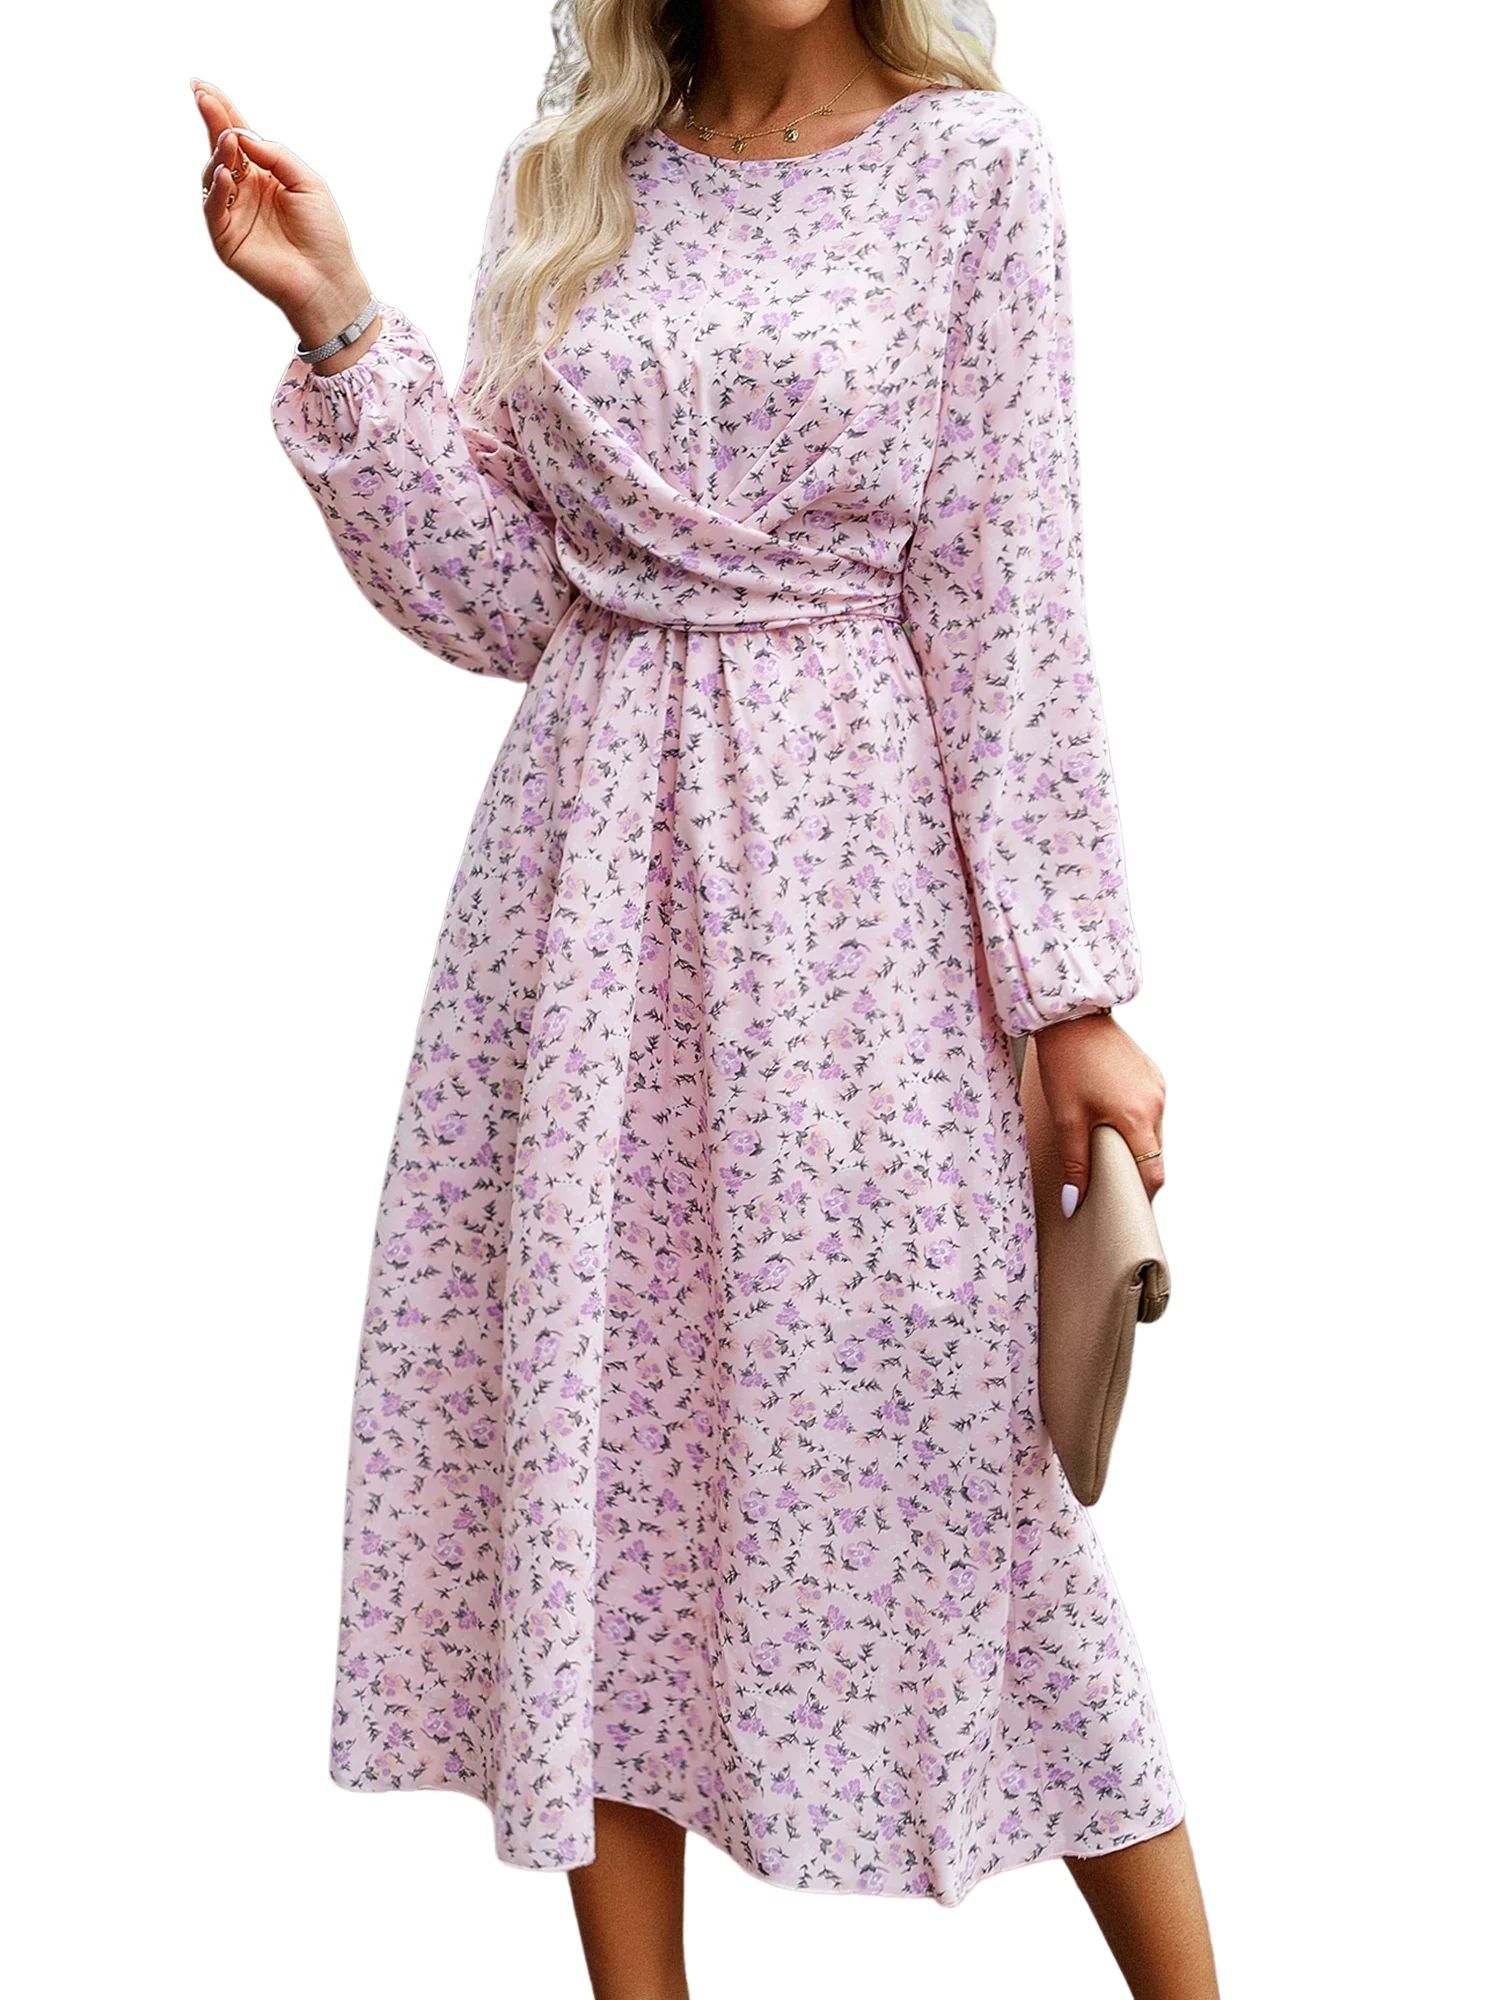 Hanerdun Women Floral Belted Dresses Female Long Sleeve A-Line Midi Party Casual Dress Pink S | Walmart (US)